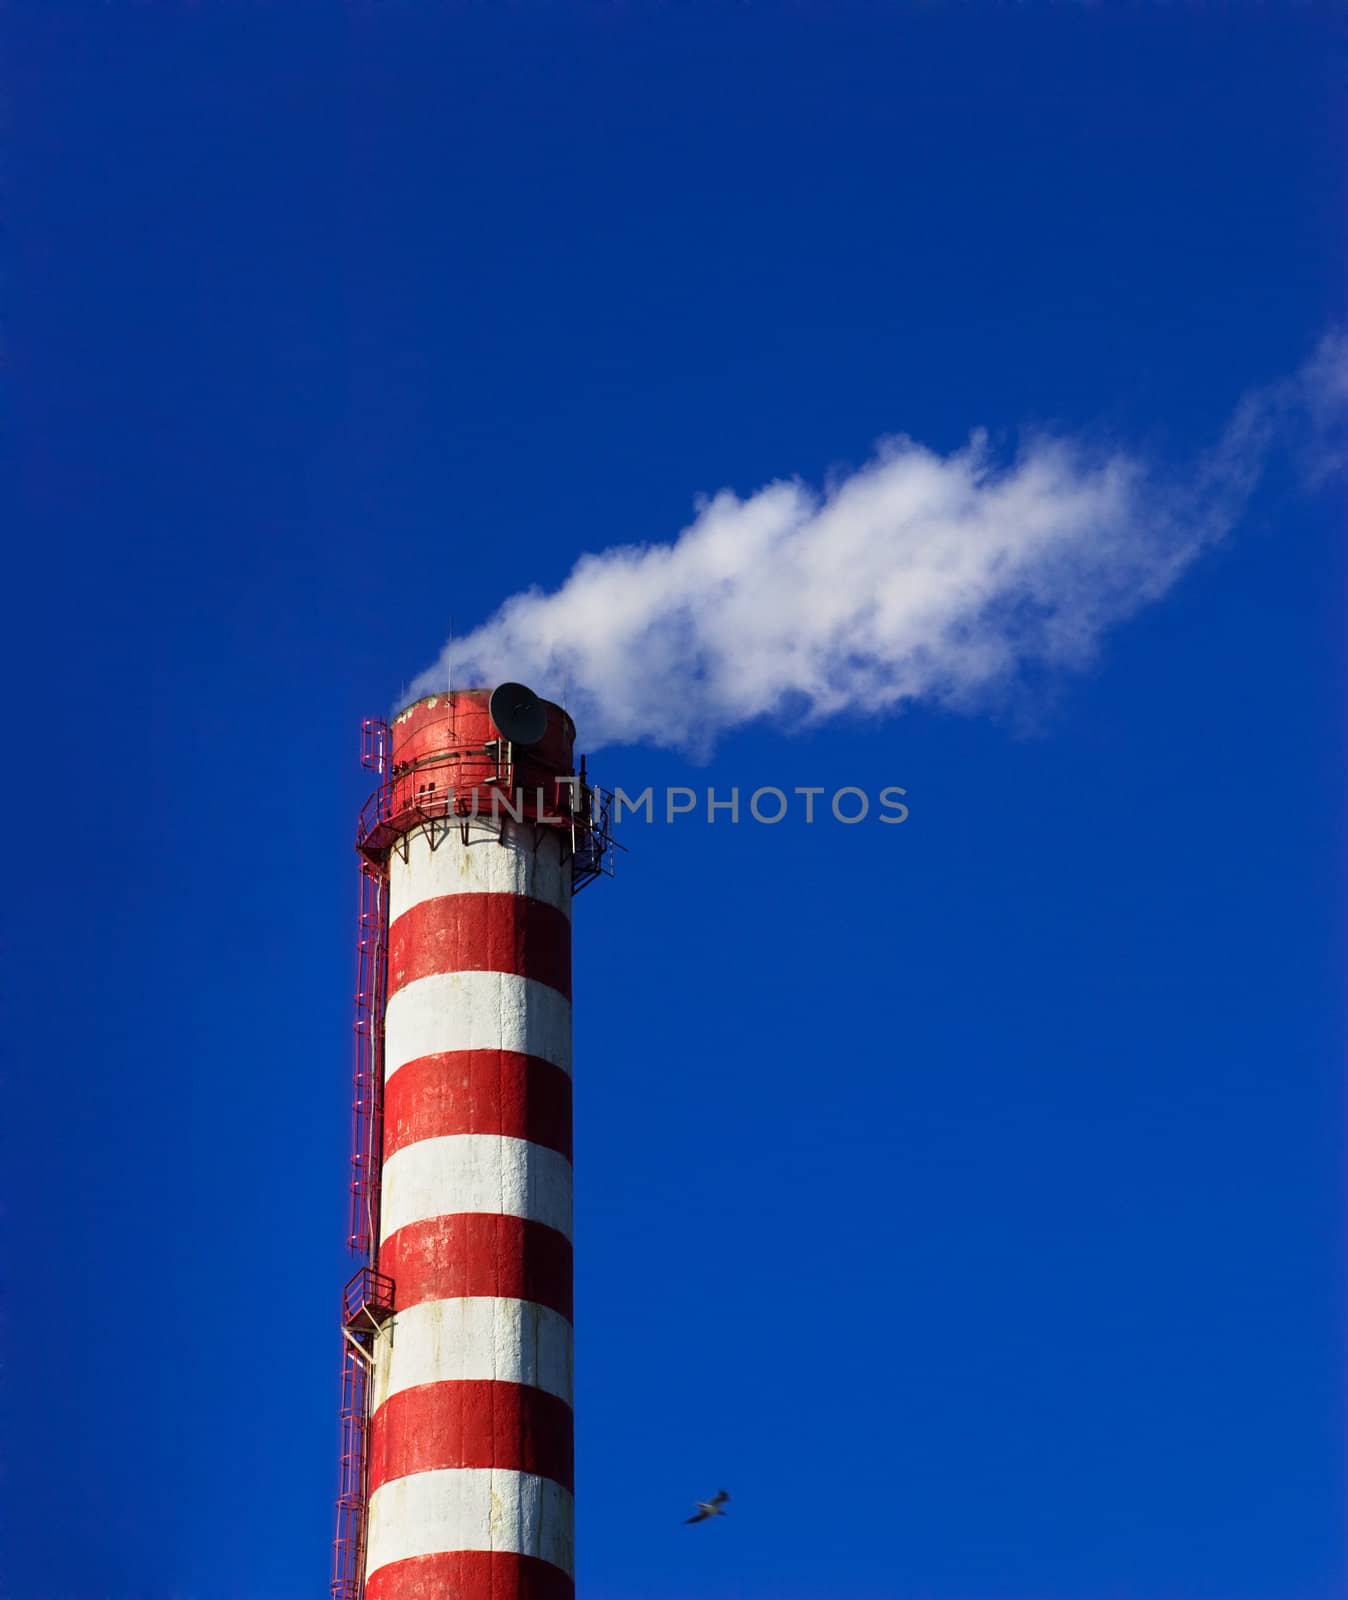 heating plant chimney white smoke with blue sky